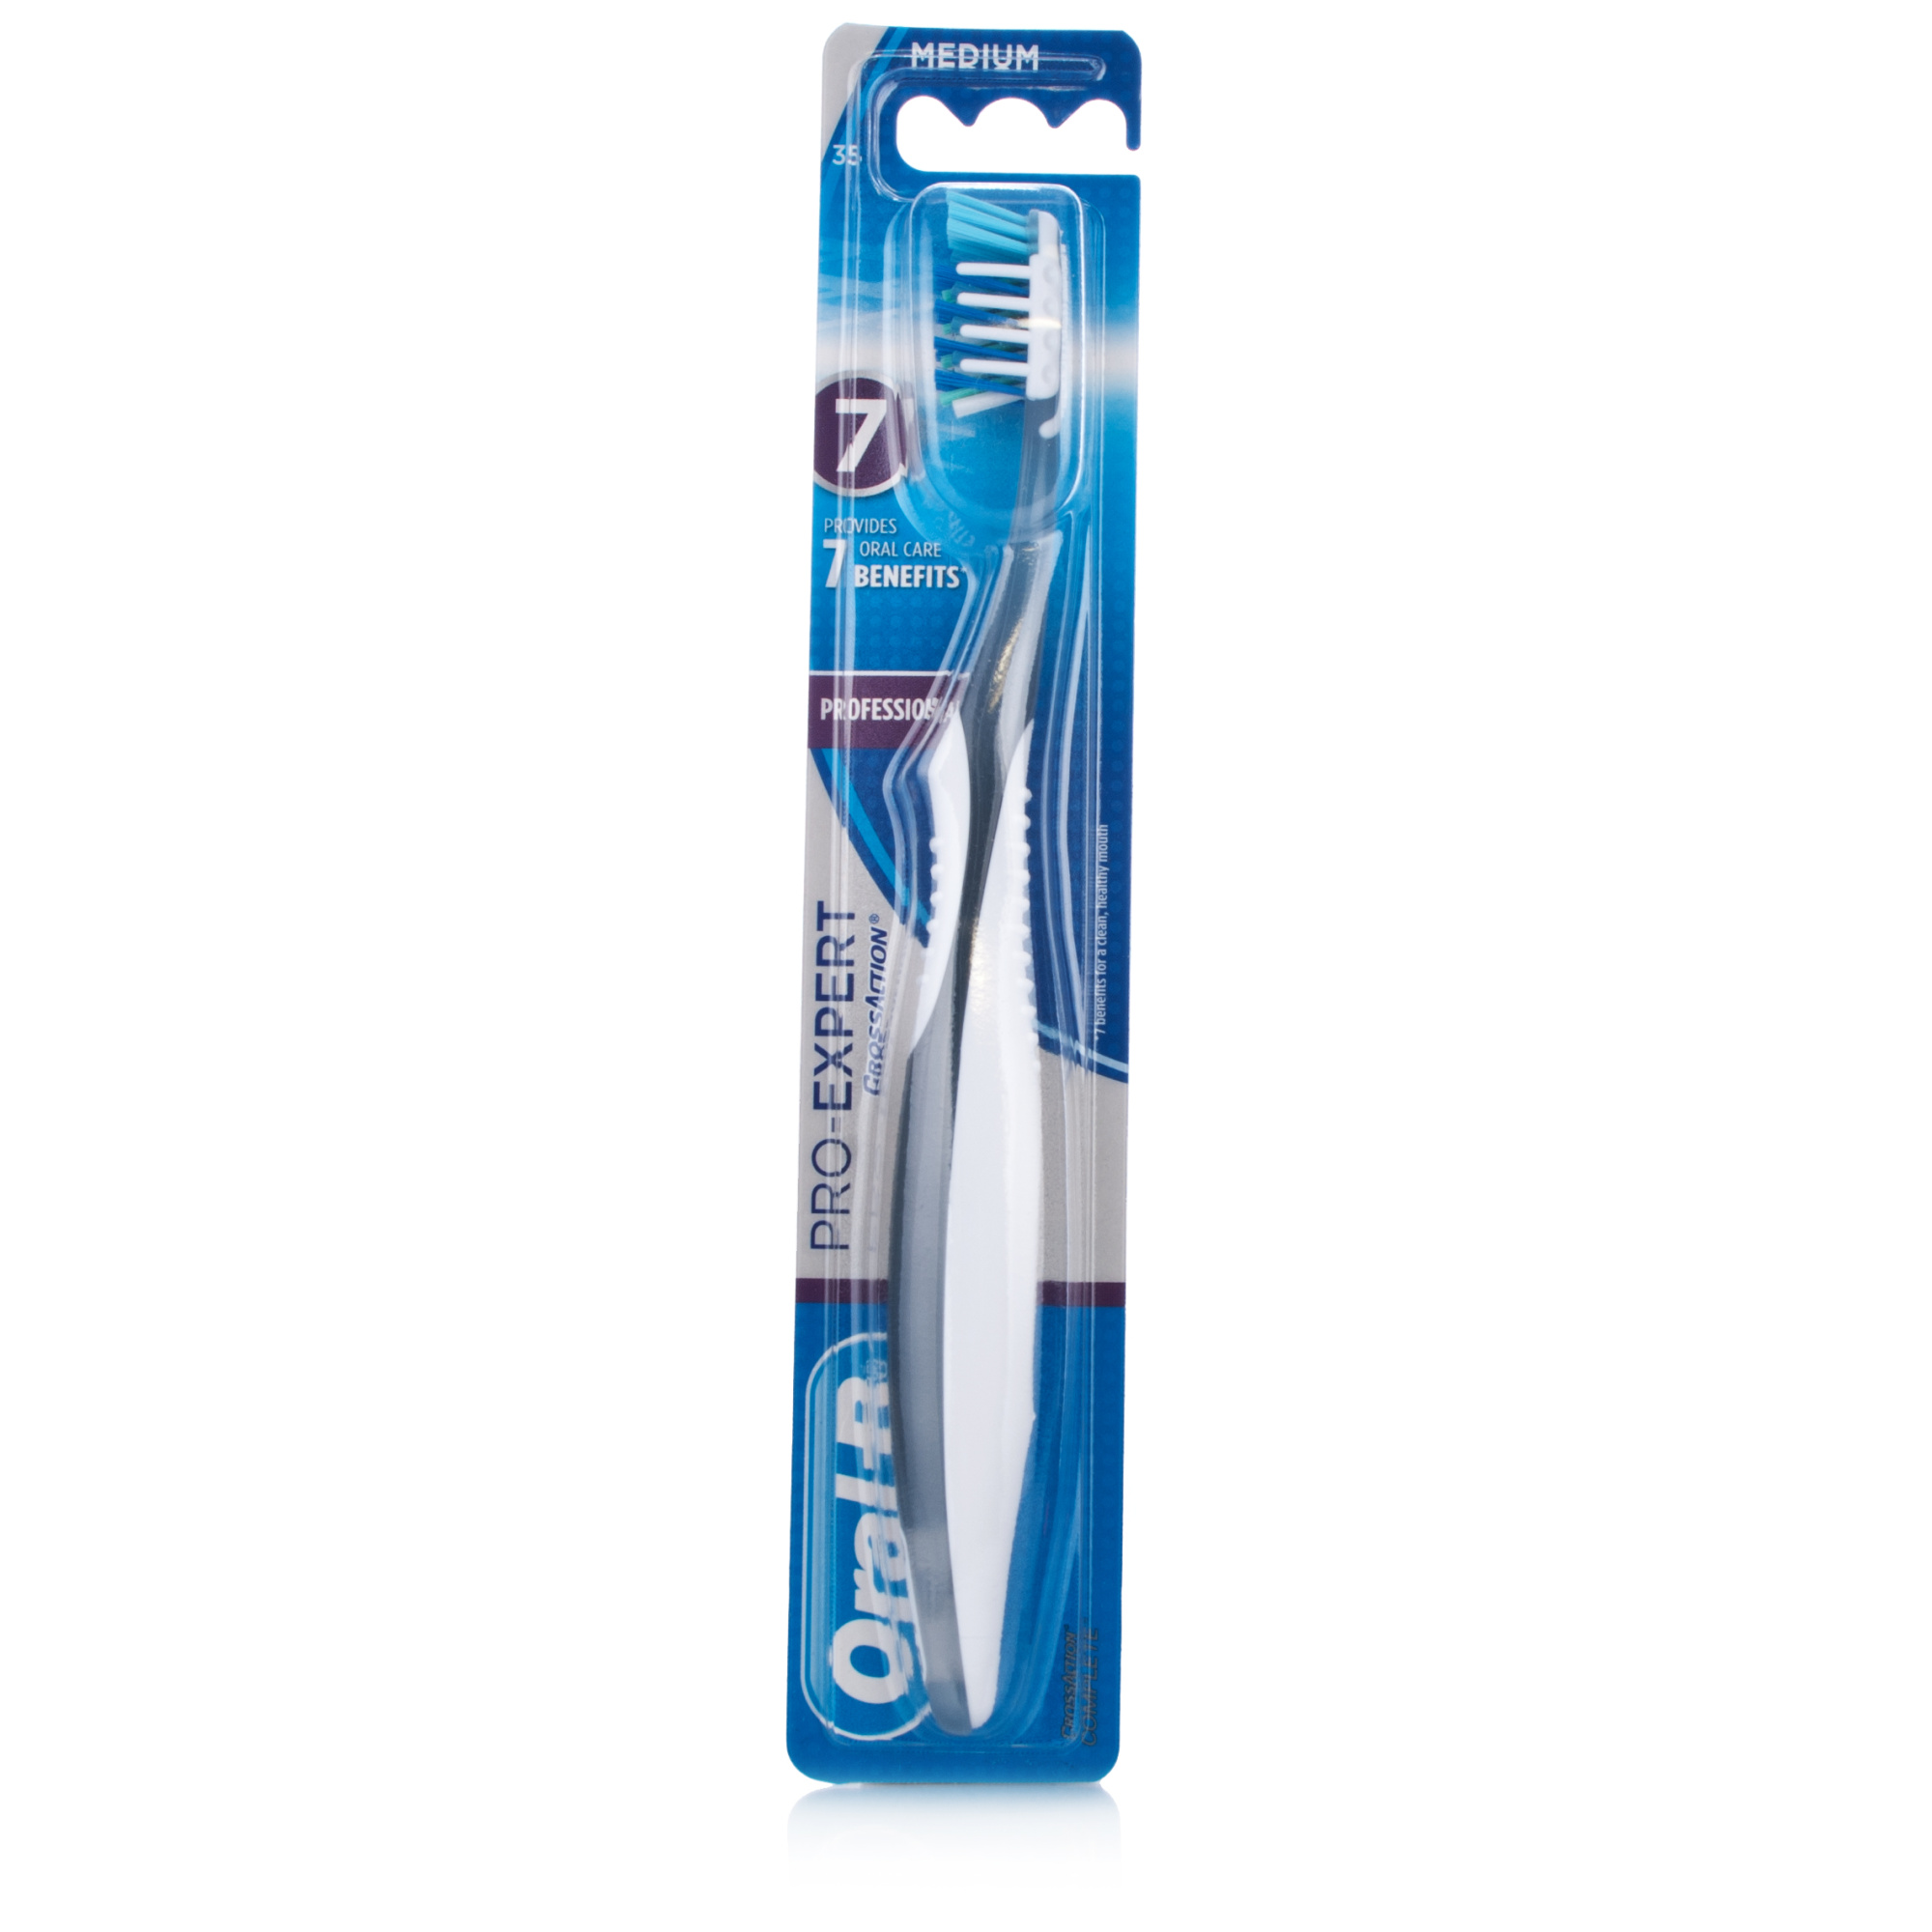 Oral B Crossaction Toothbrush 22